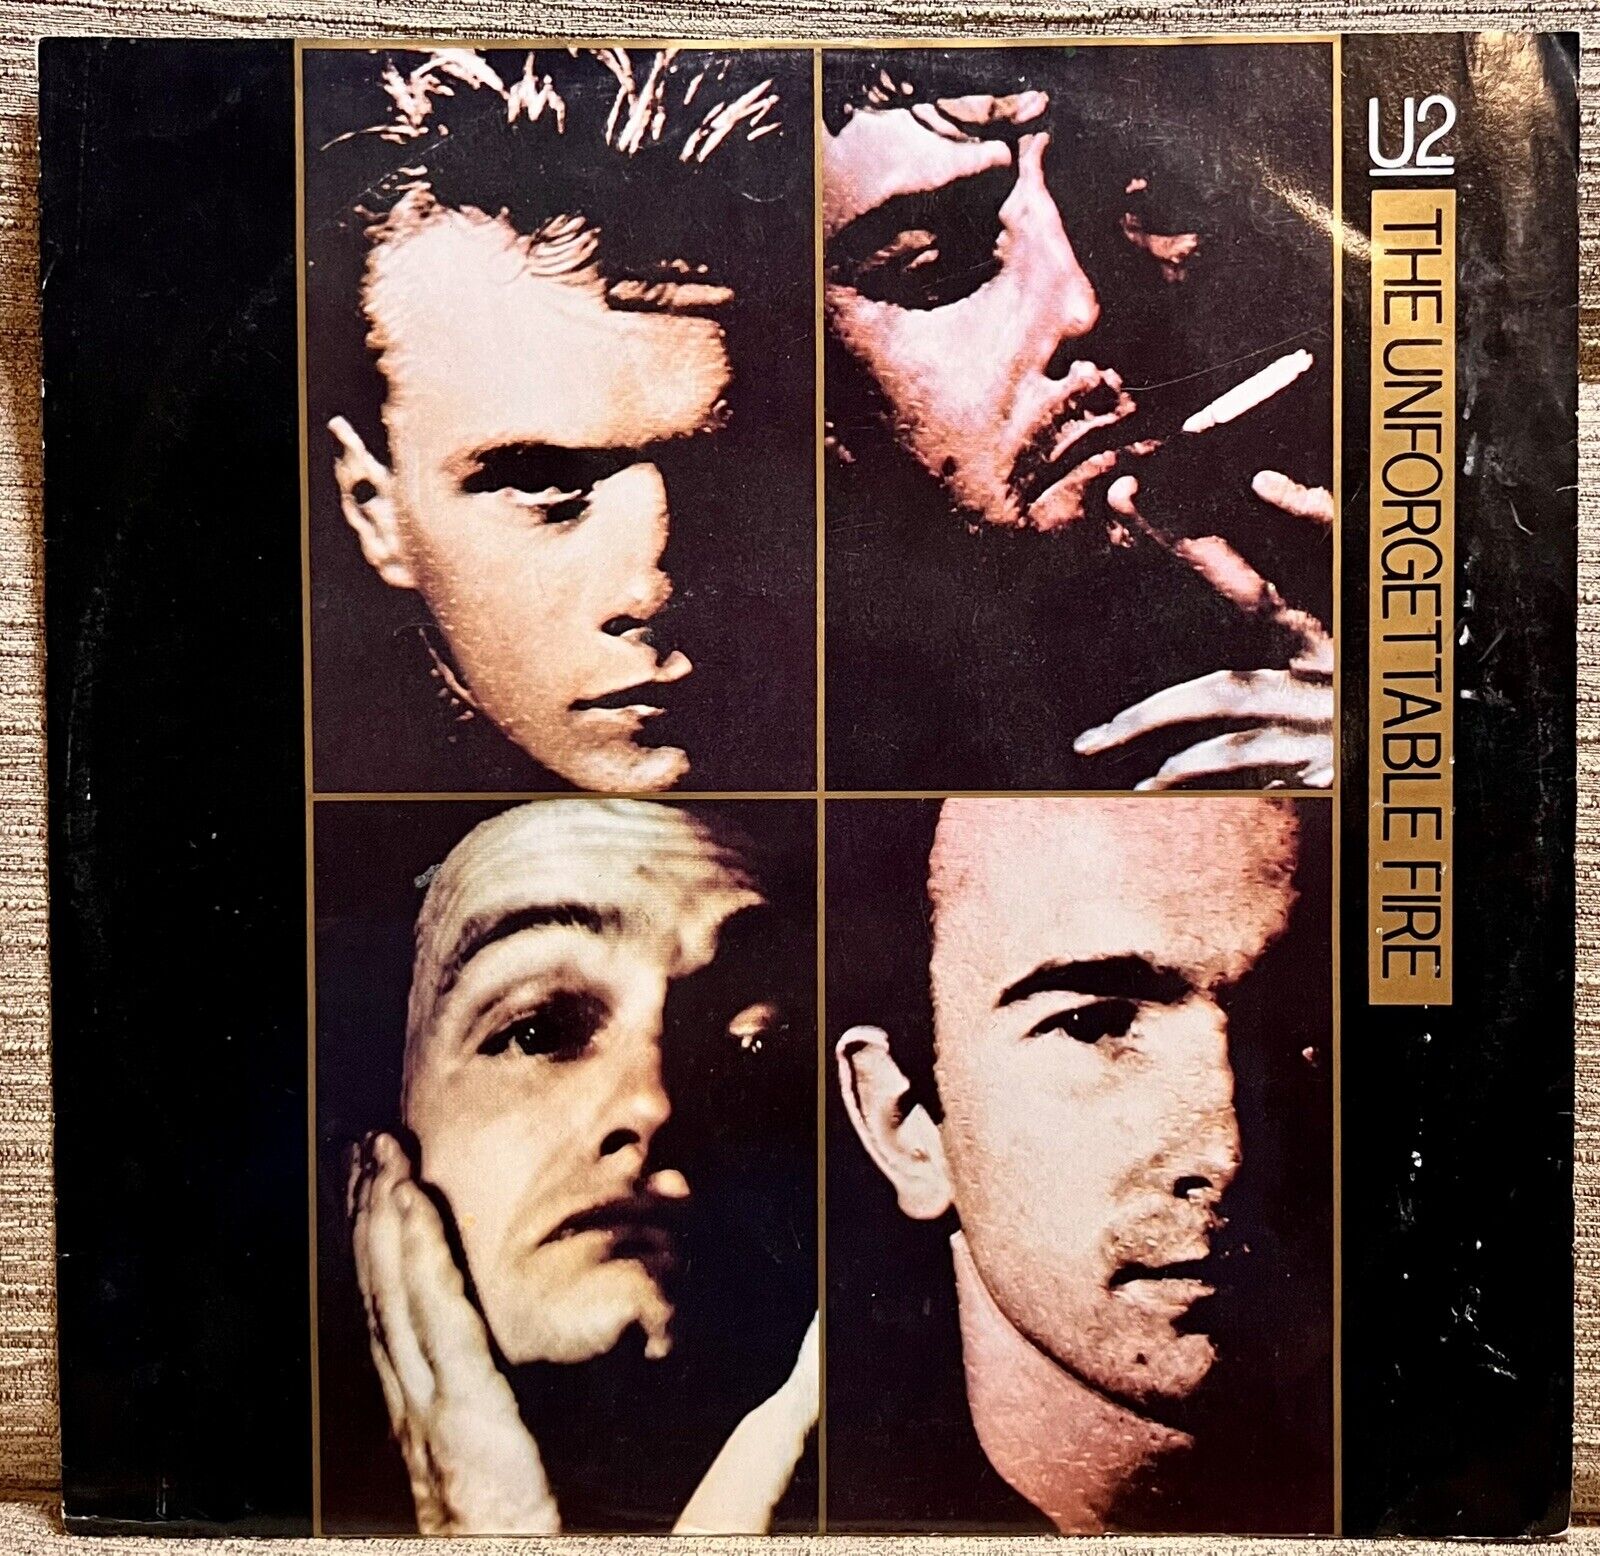 U2 The Unforgettable Fire 12” Vinyl Record Rare UK